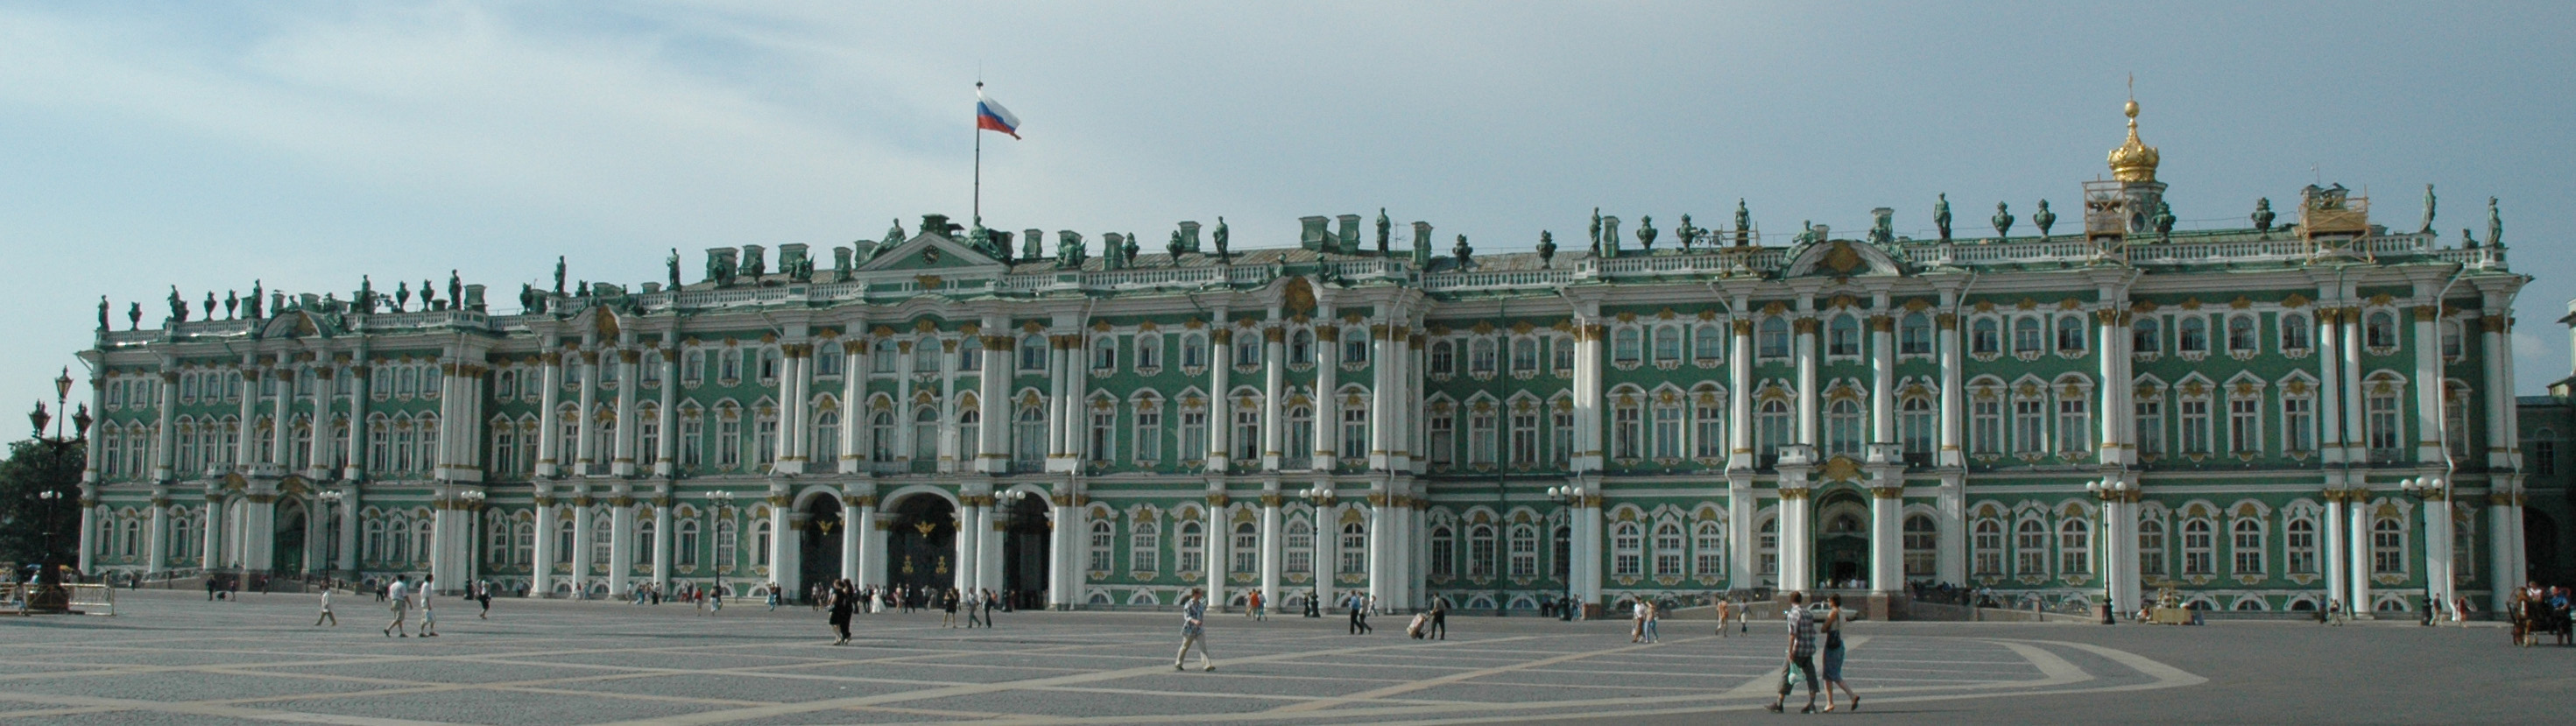 File:Winter Palace Facade II.jpg - Wikimedia Commons